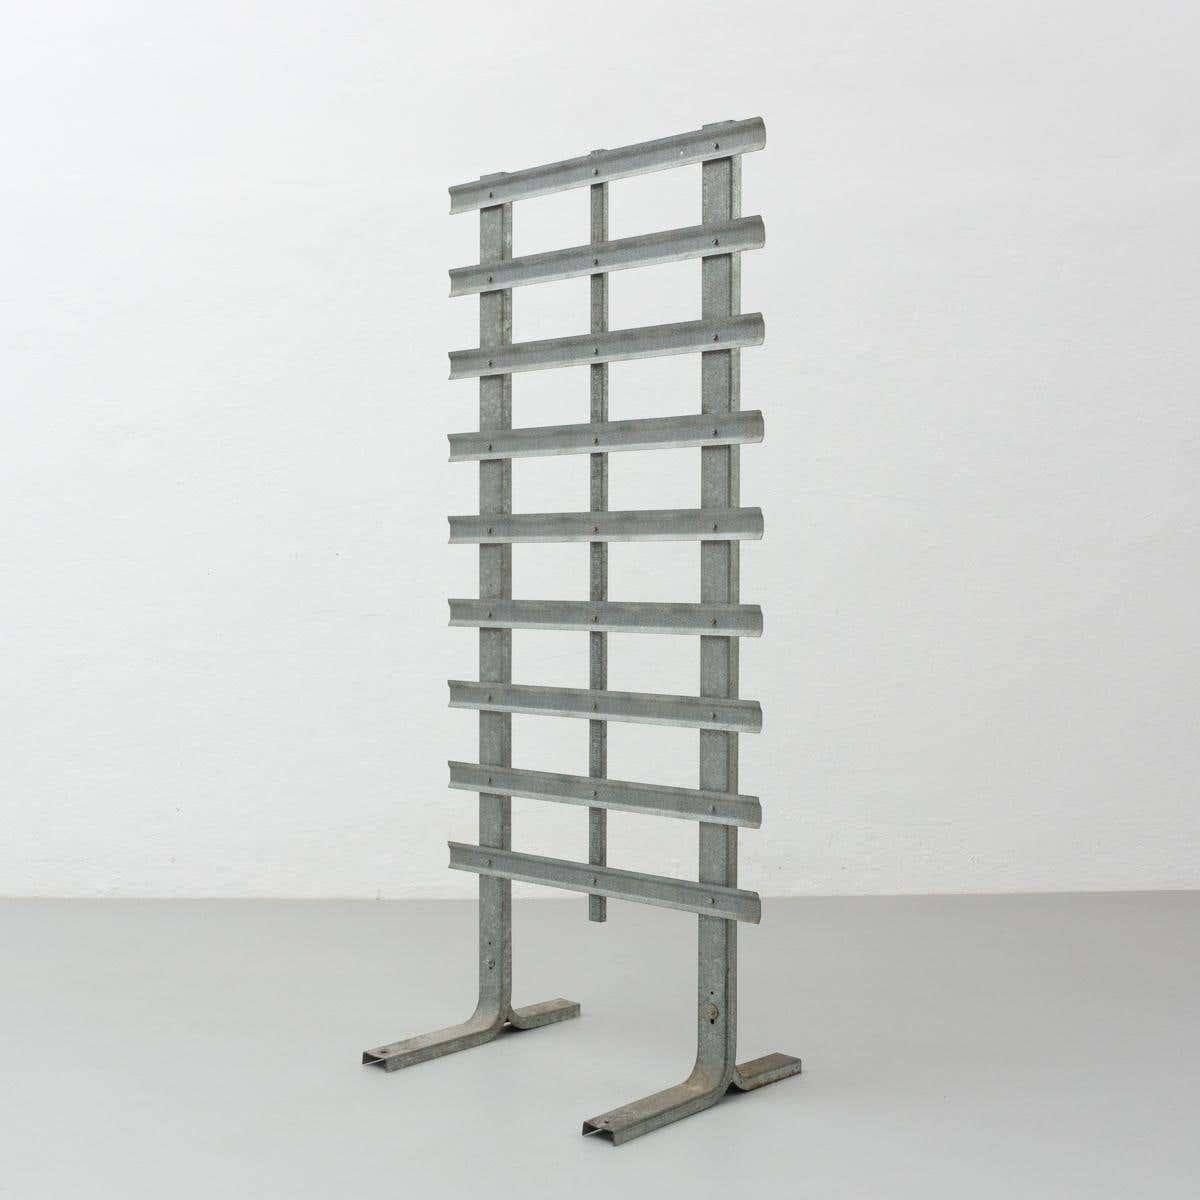 European Ramon Horts Contemporary Abstract Minimalist Sculpture in Metal